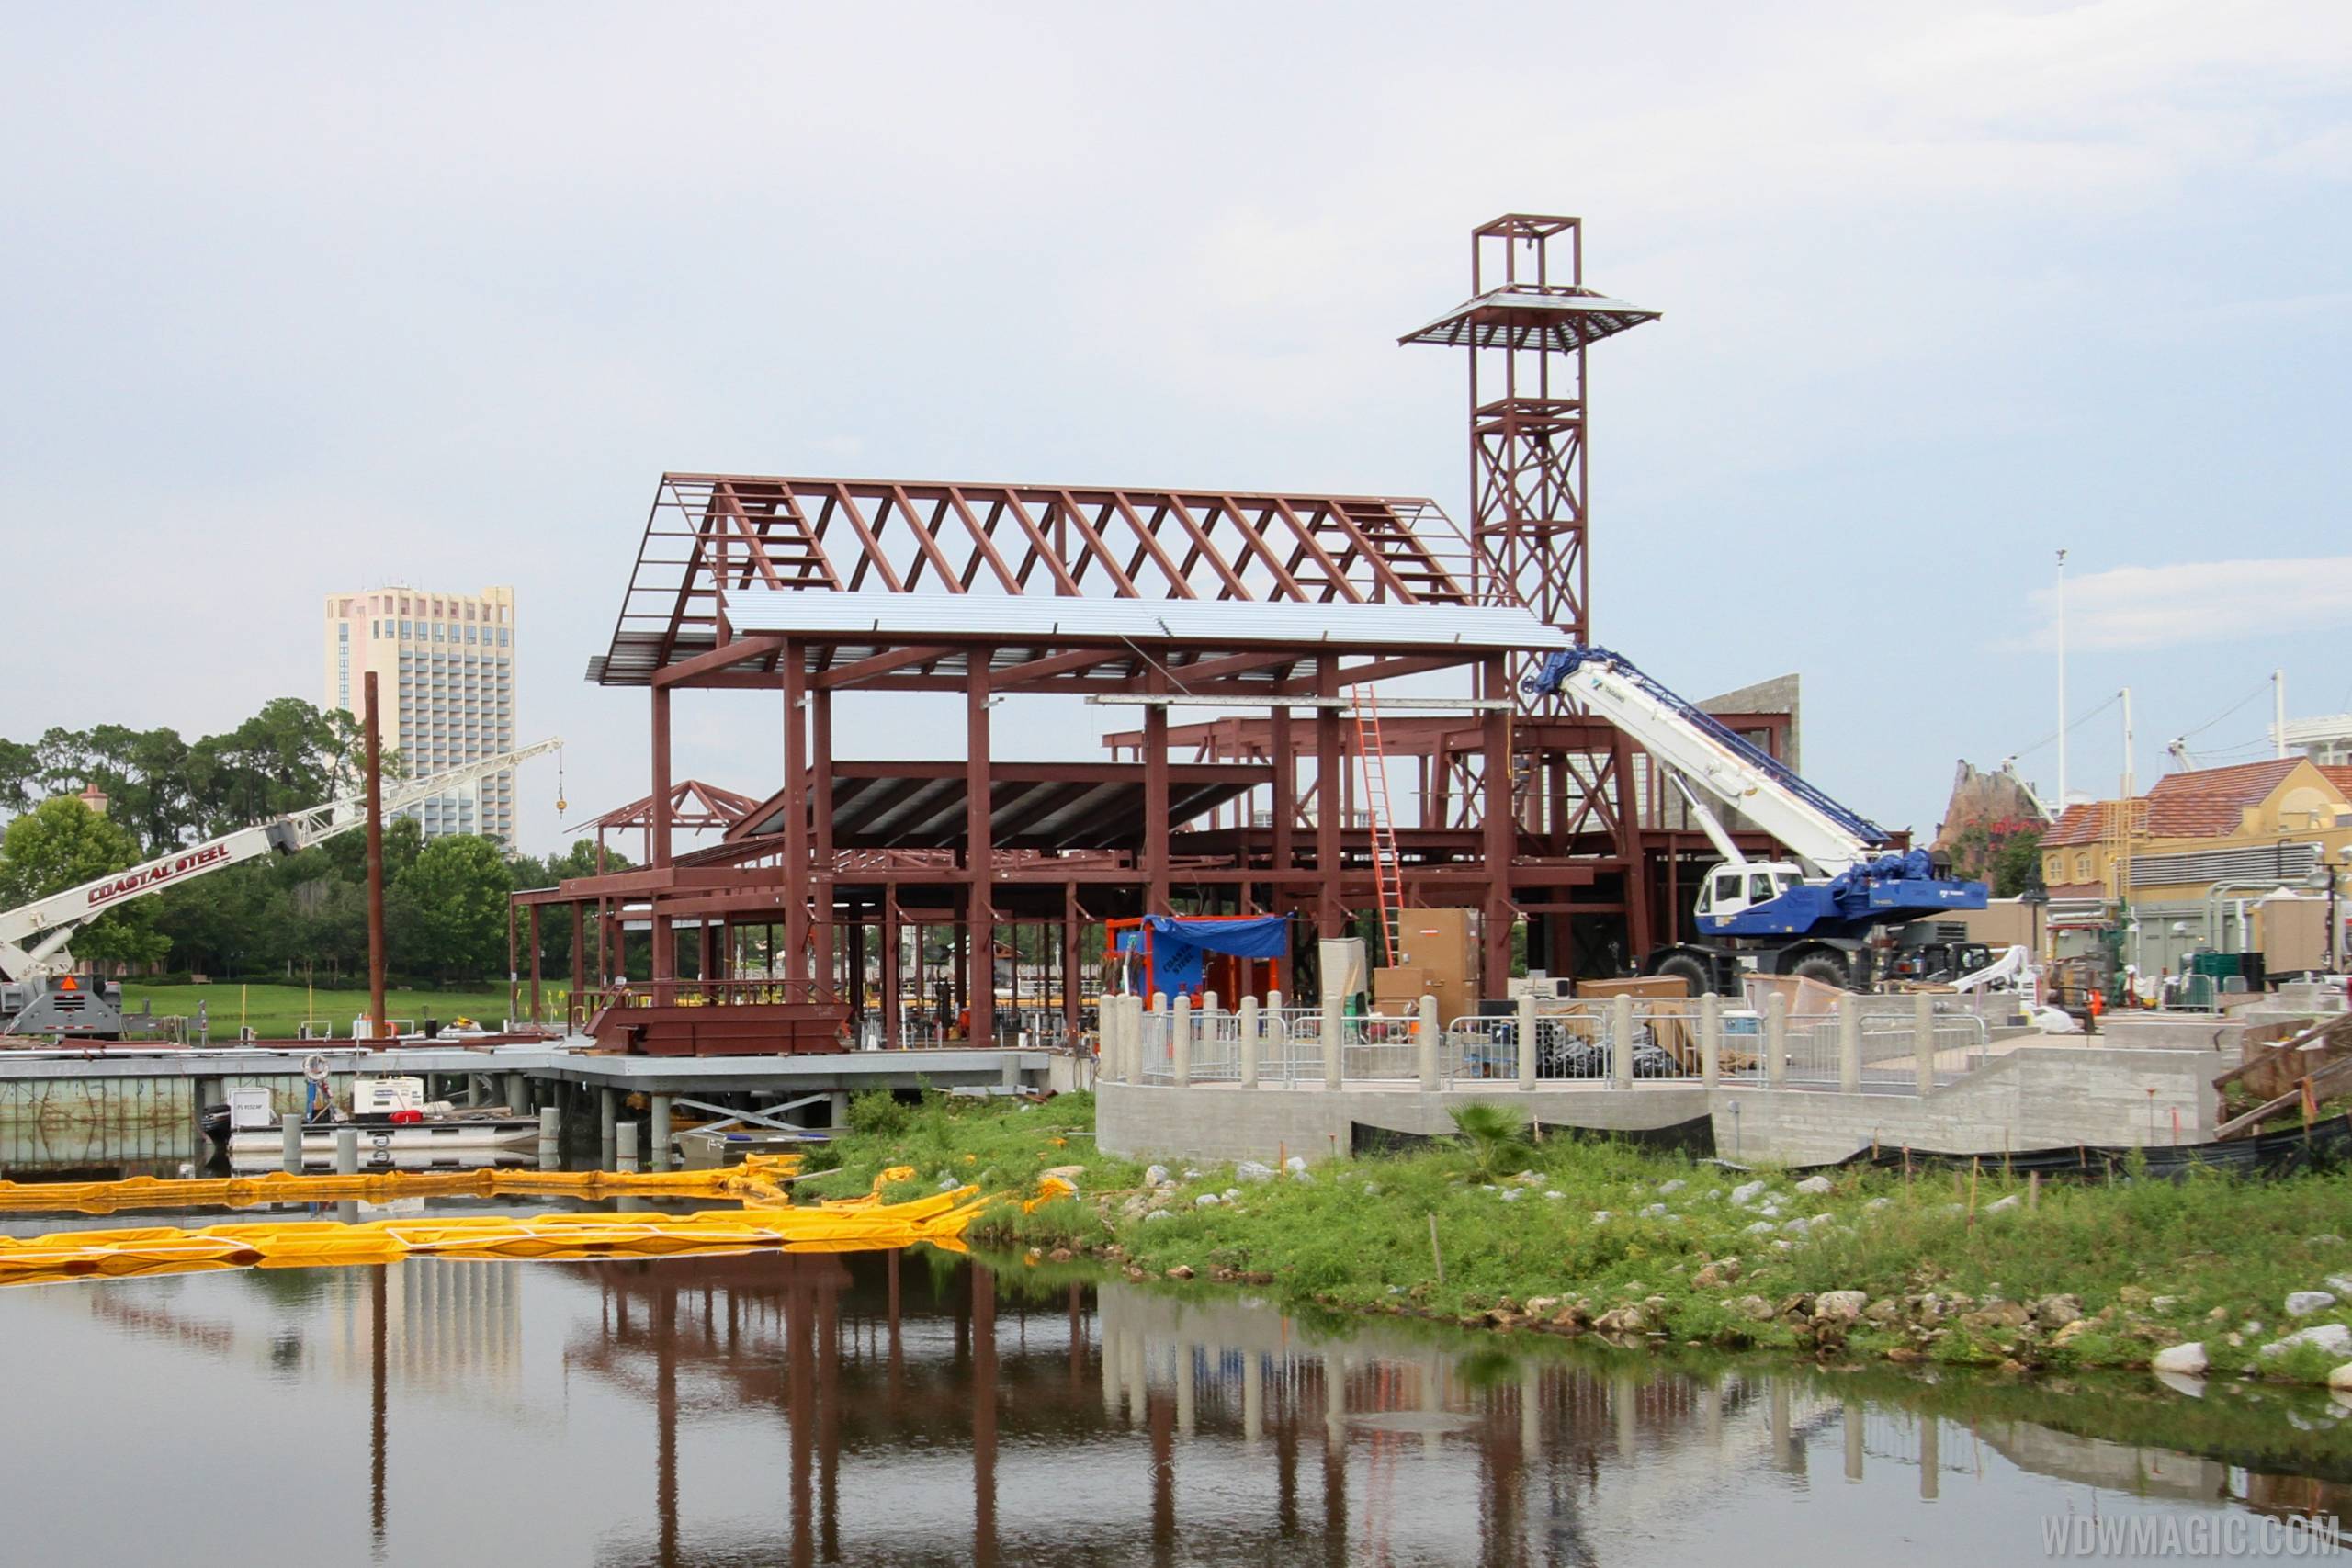 PHOTOS - The Boathouse construction at Disney Springs